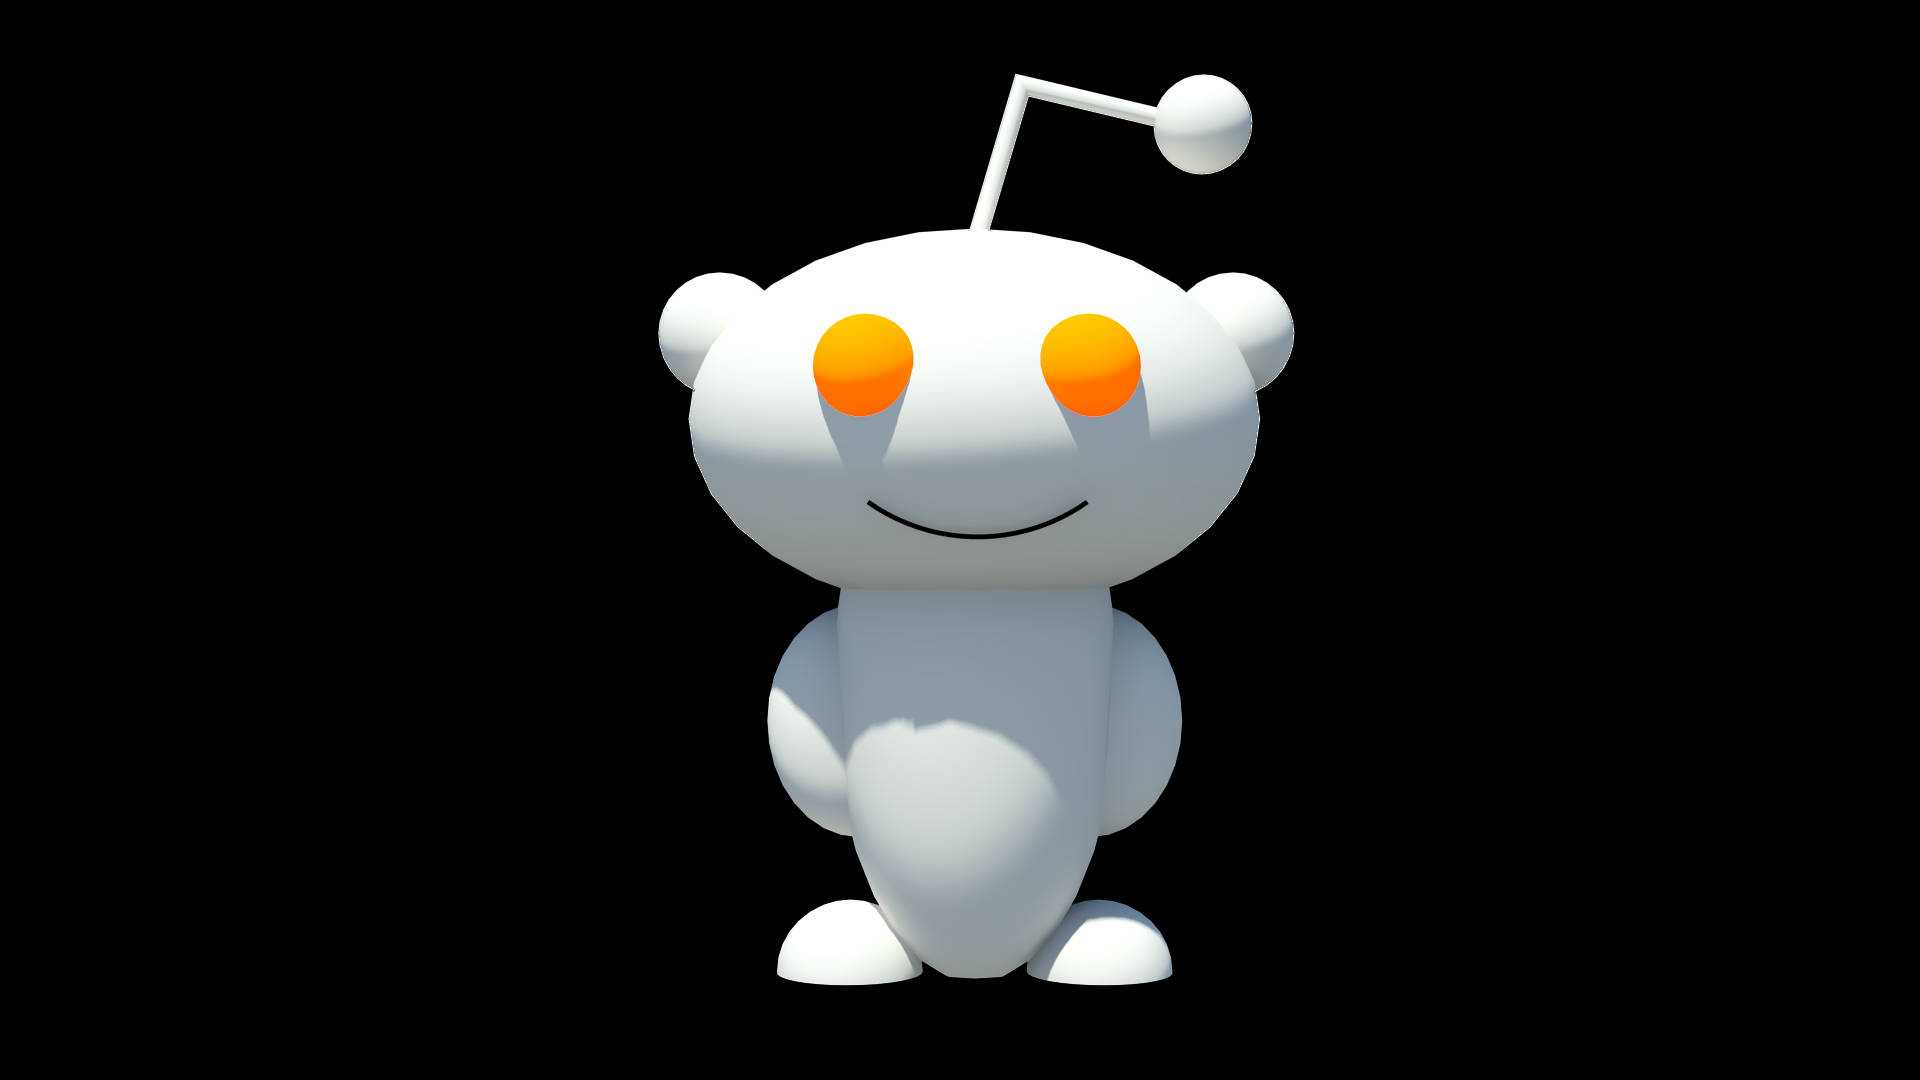 Download 3d White Snoo Reddit Wallpaper 